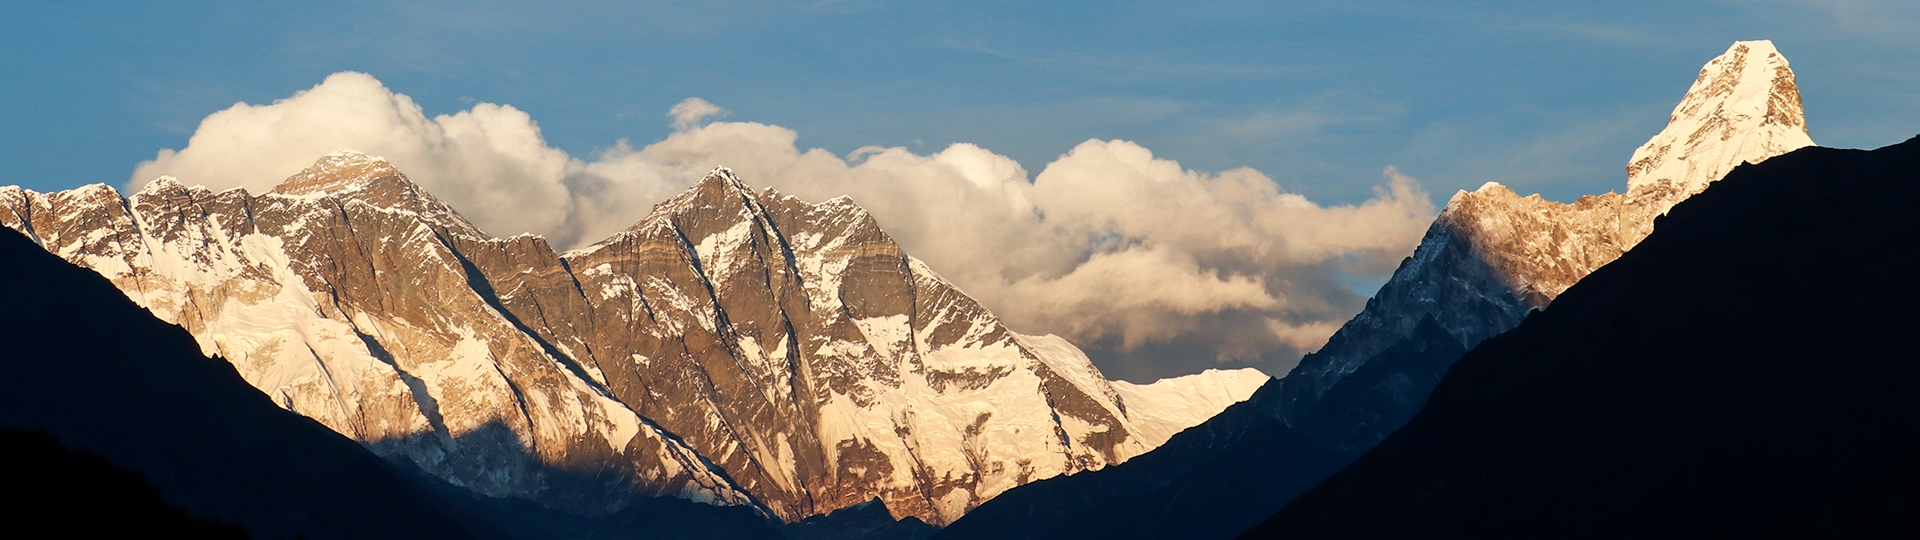 Popular Monasteries in Everest Region of Nepal